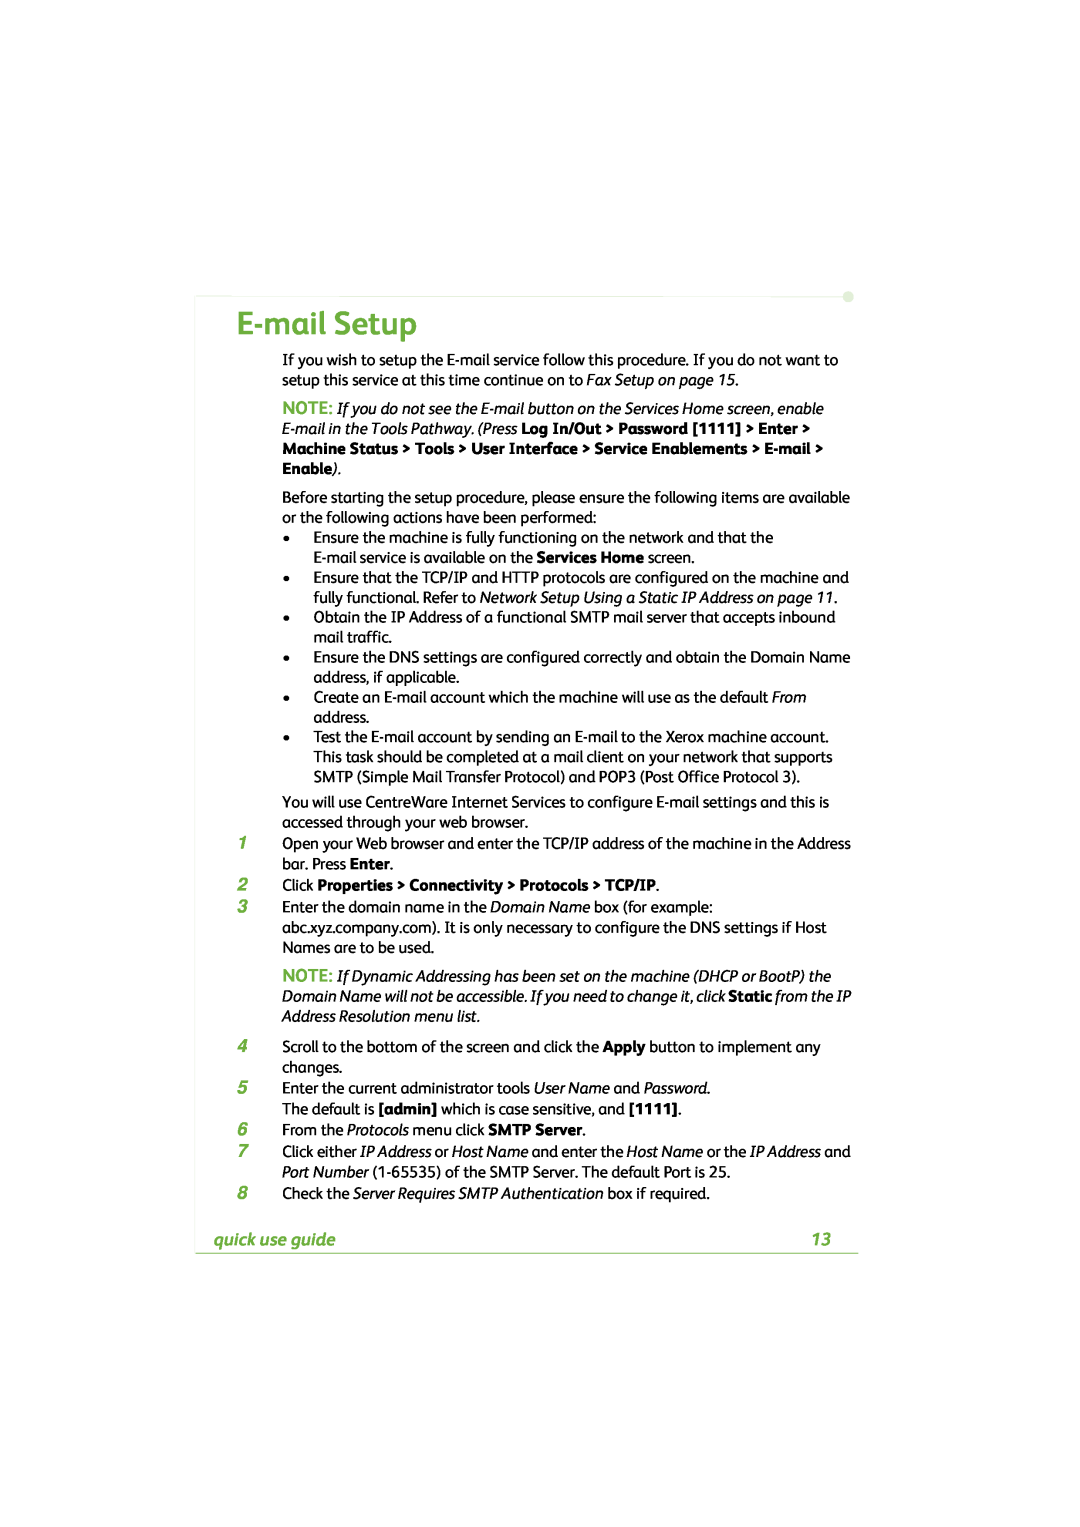 Xerox 4260C manual E-mailSetup, quick use guide 